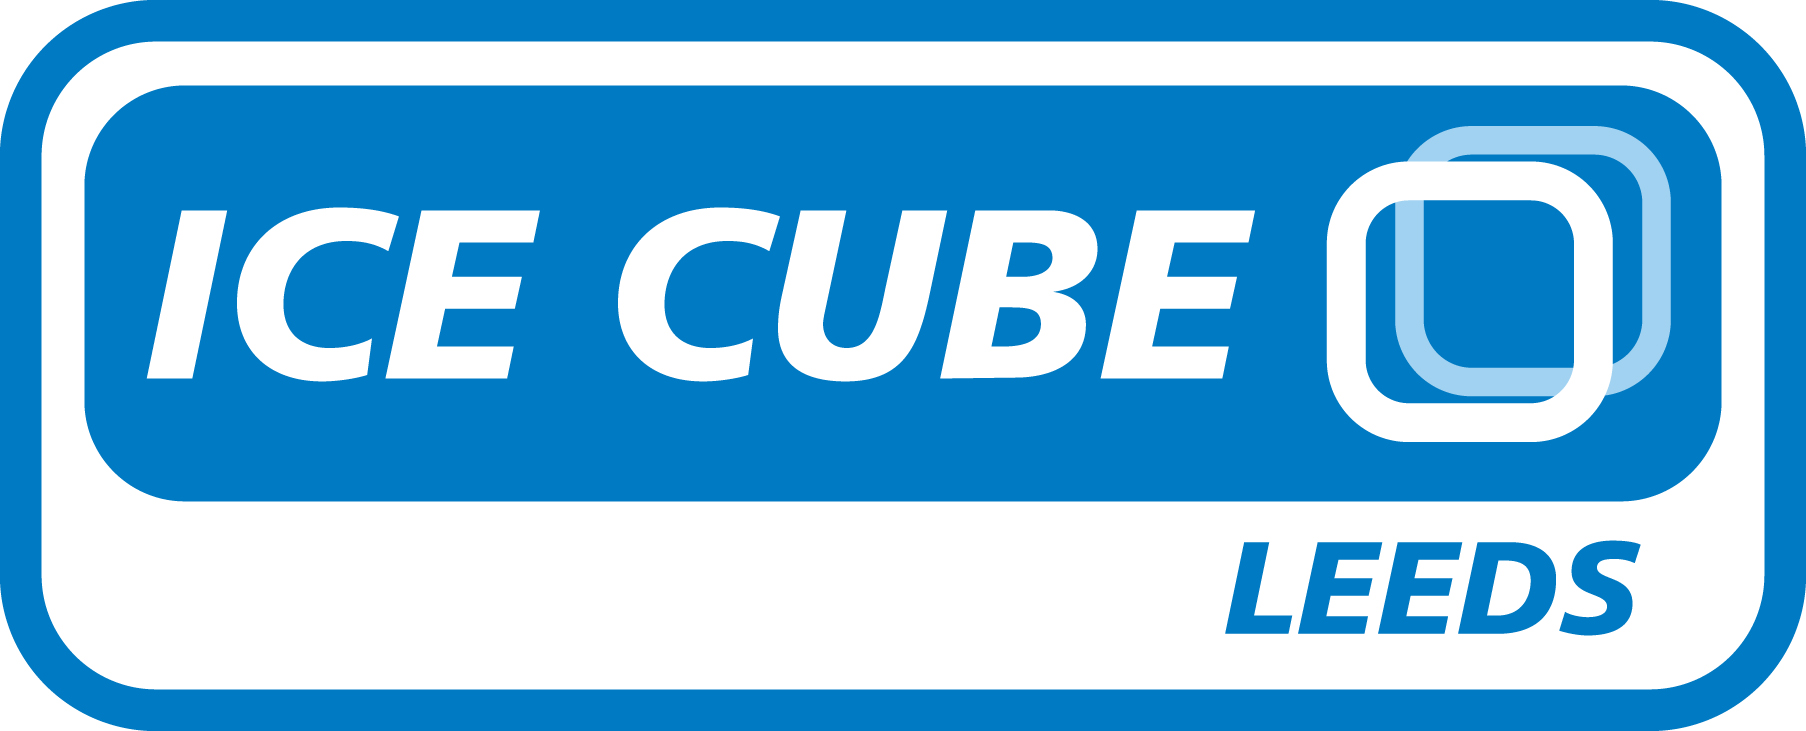 Ice Cube Logo